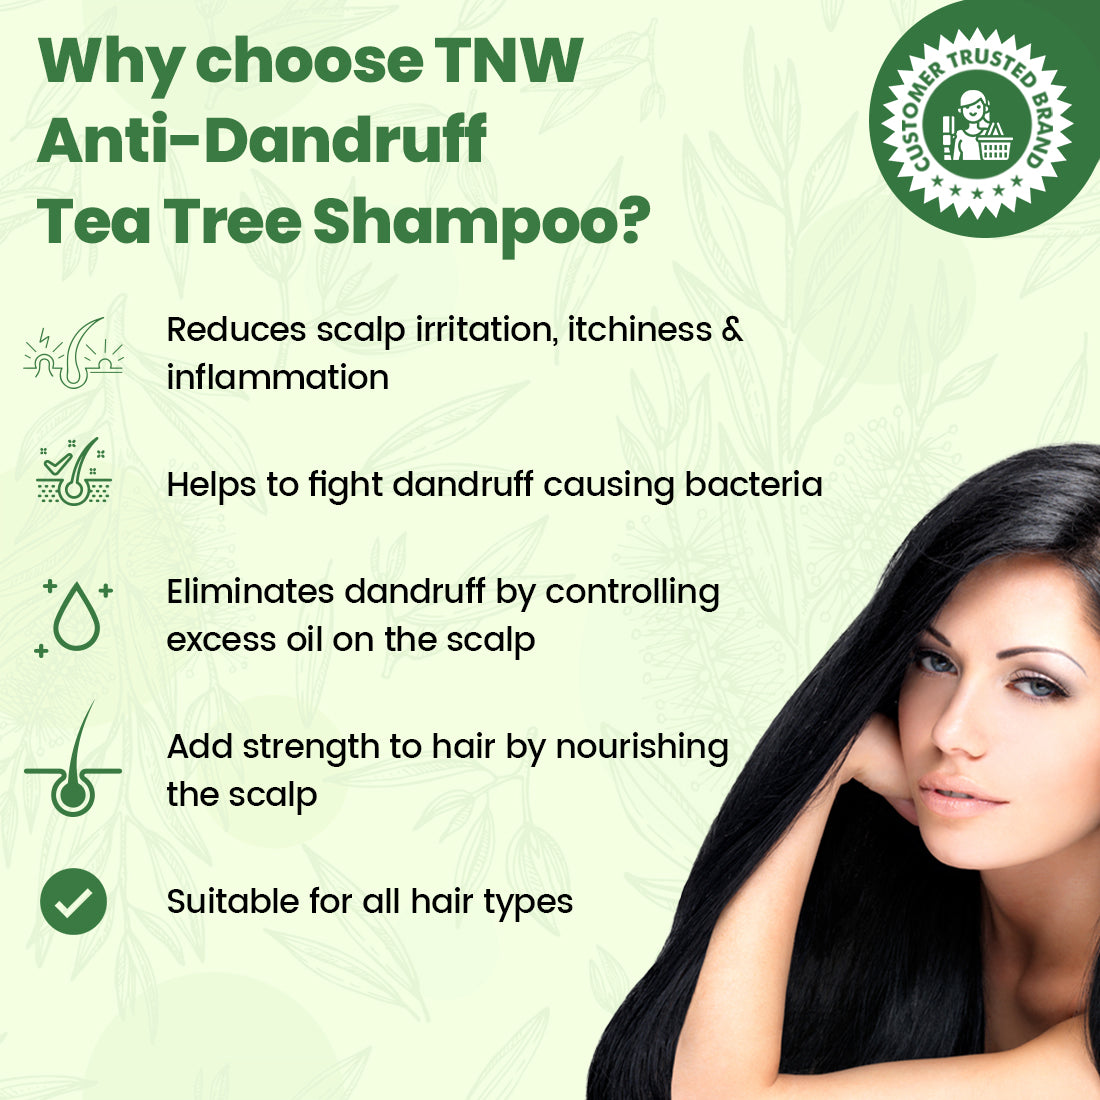 Tea Tree Shampoo For Dandruff Free Healthy Hair | TNW The Wash